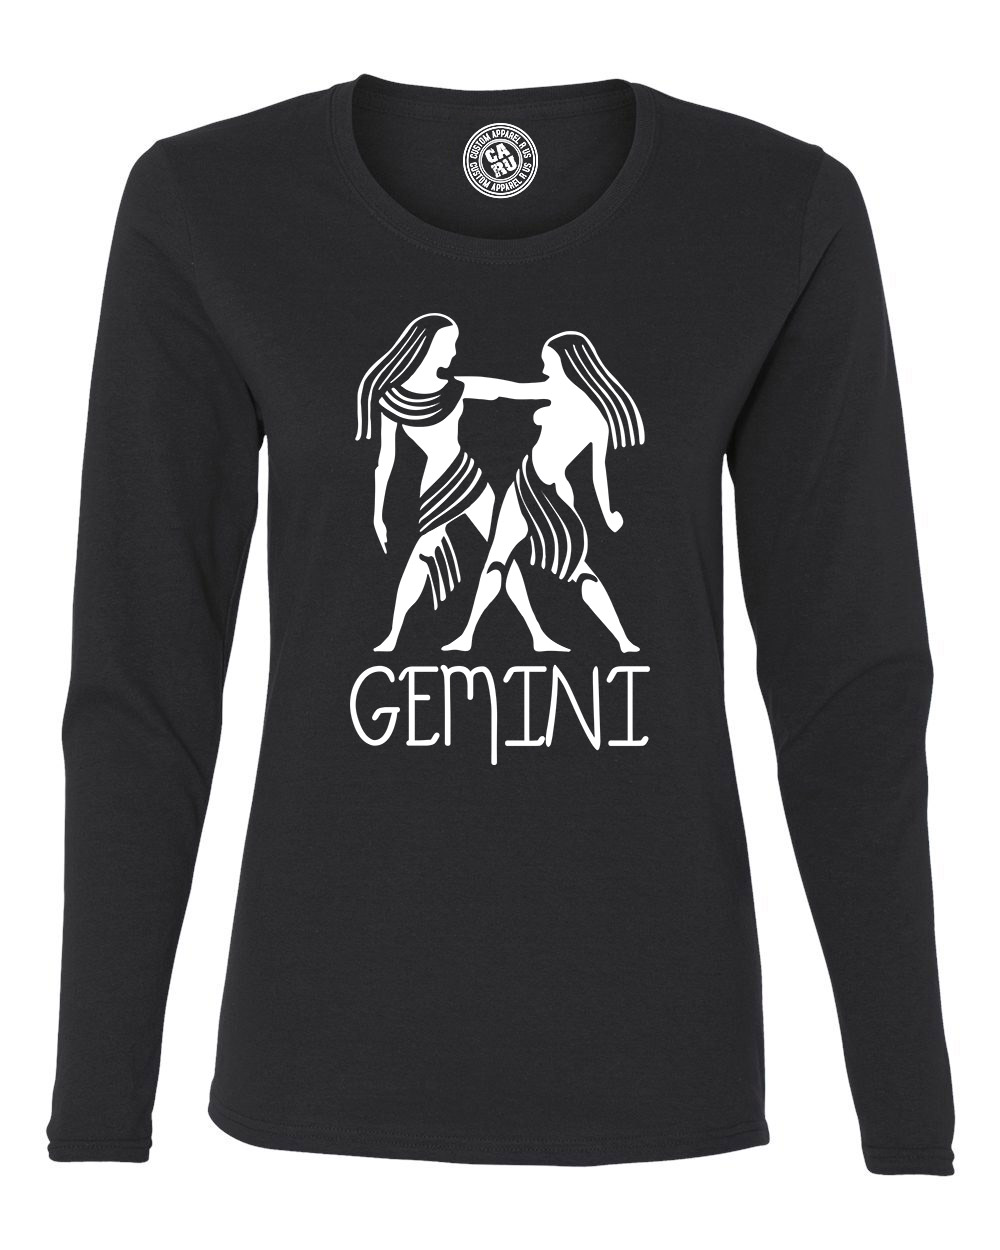 gemini birthday shirts ideas